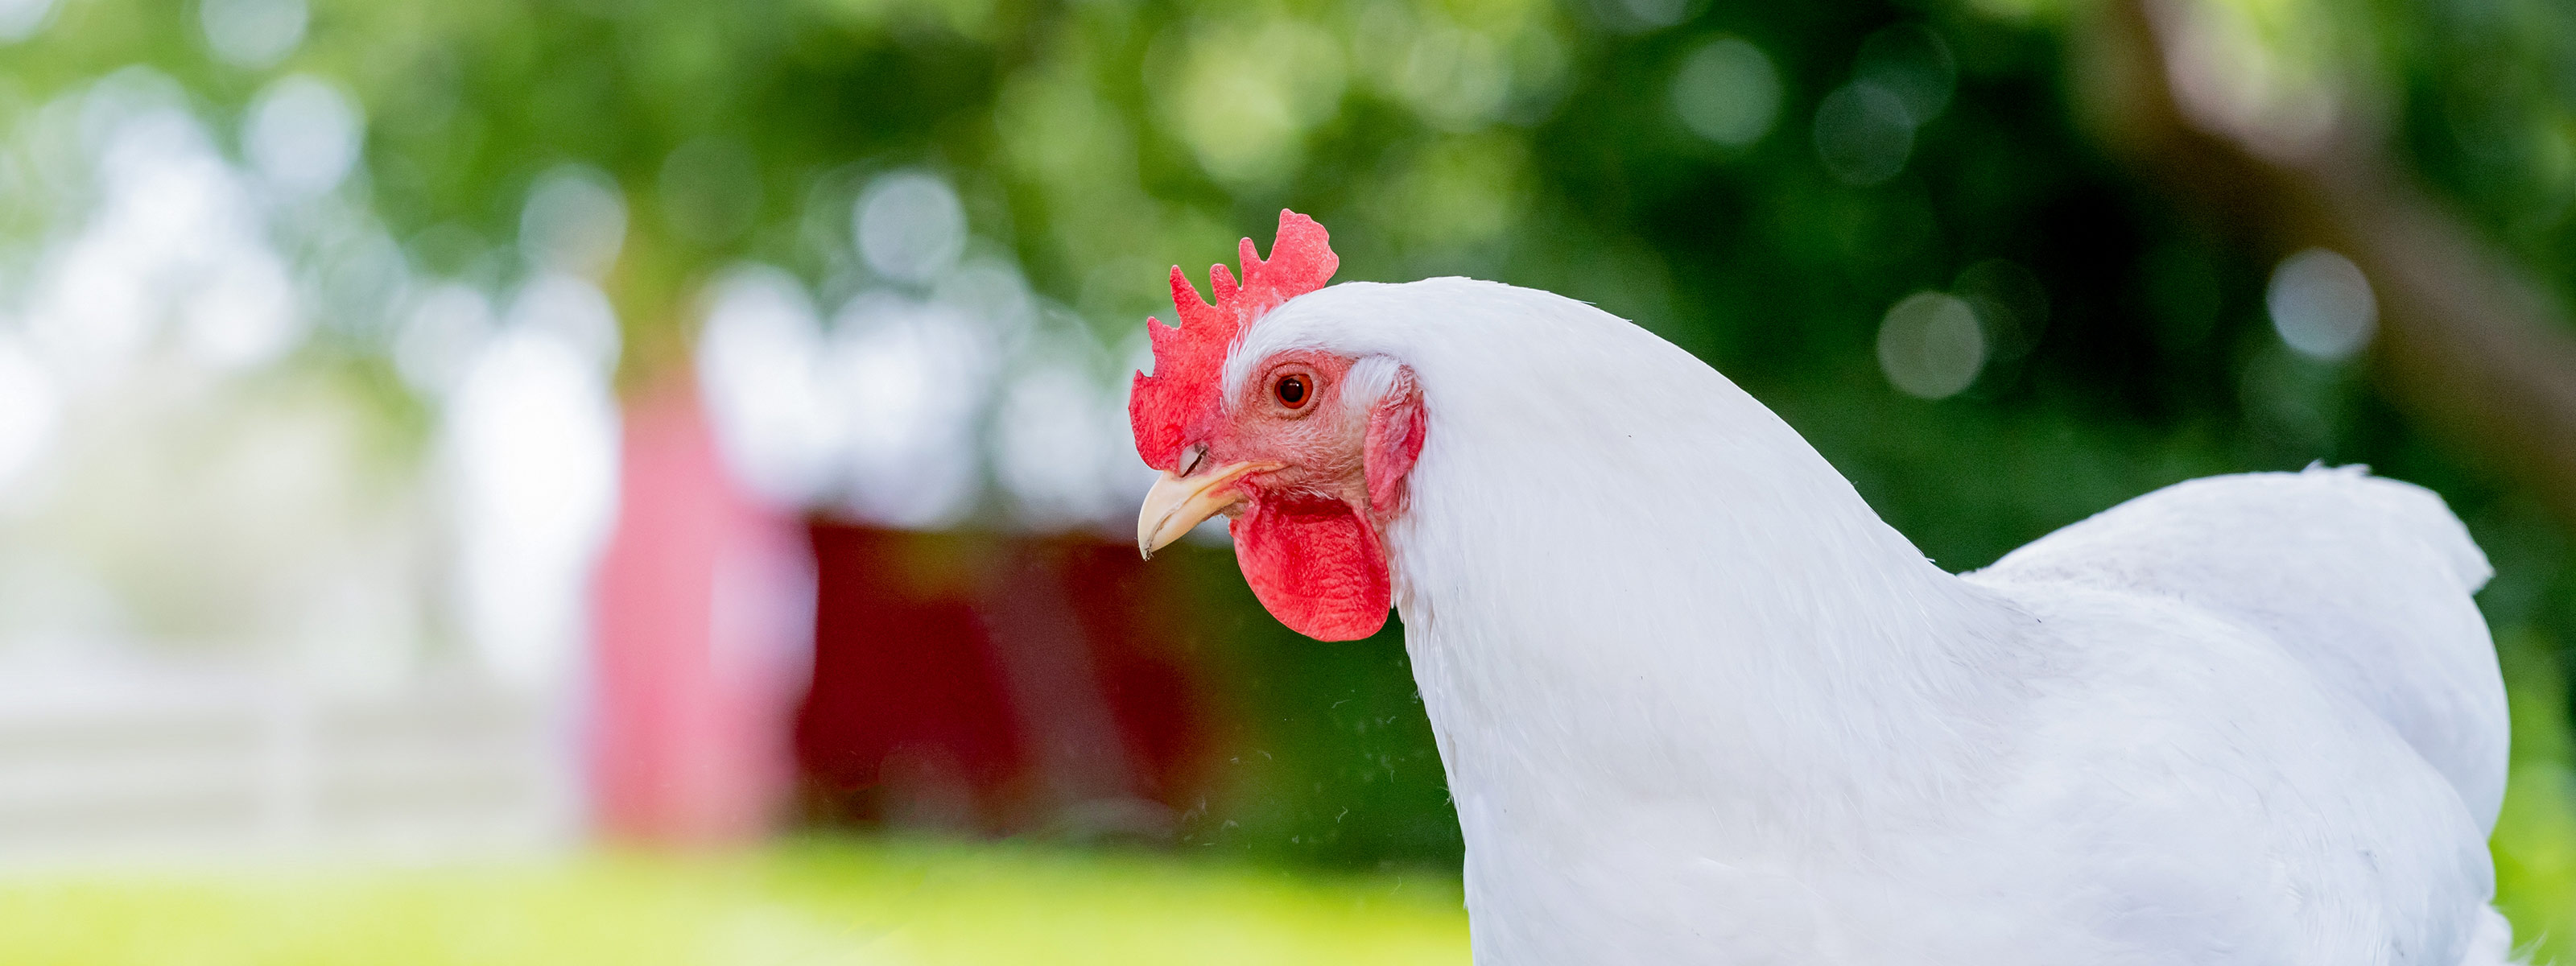 Can CRISPR engineer immunity to avian flu in chickens?